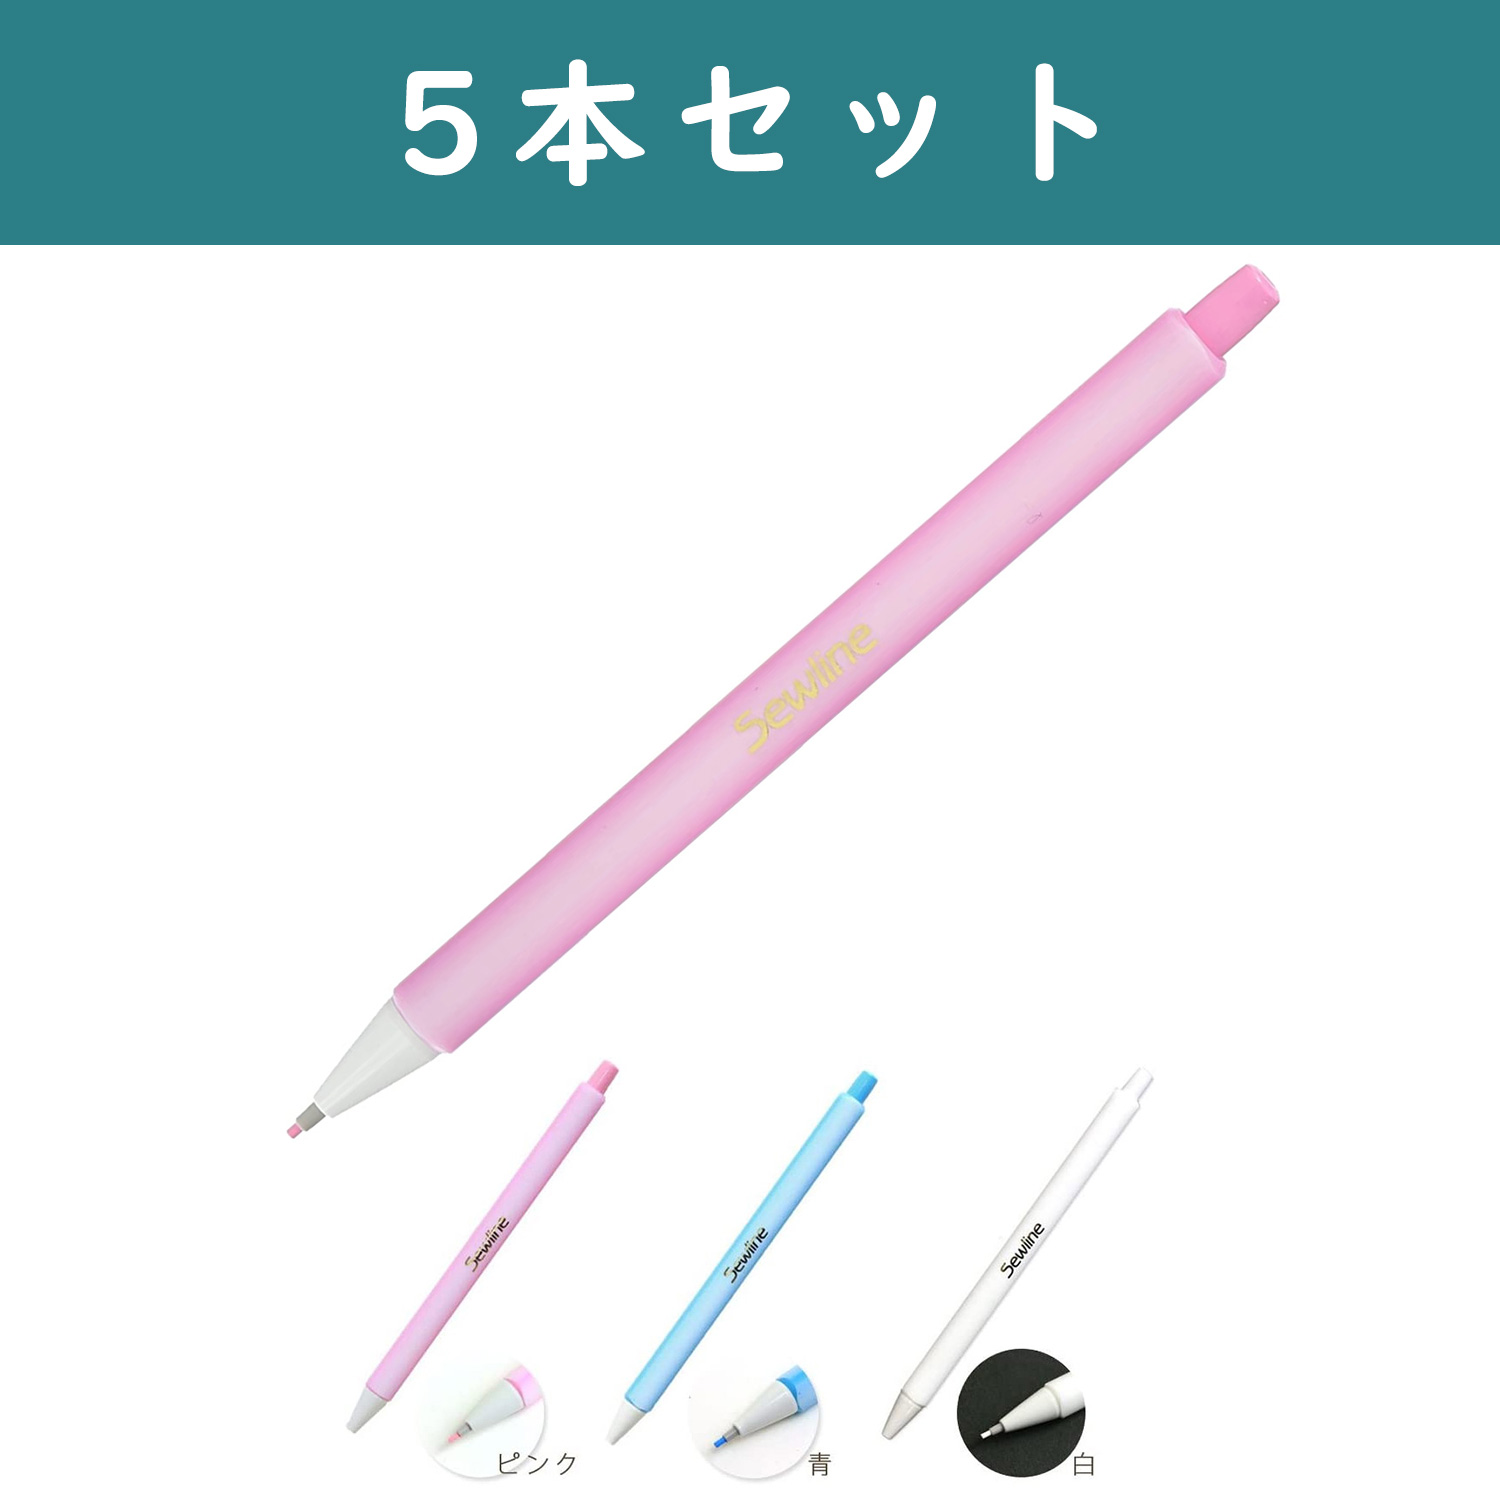 SEW050046～48-5 Chalk Pencil 5pcs set (set)